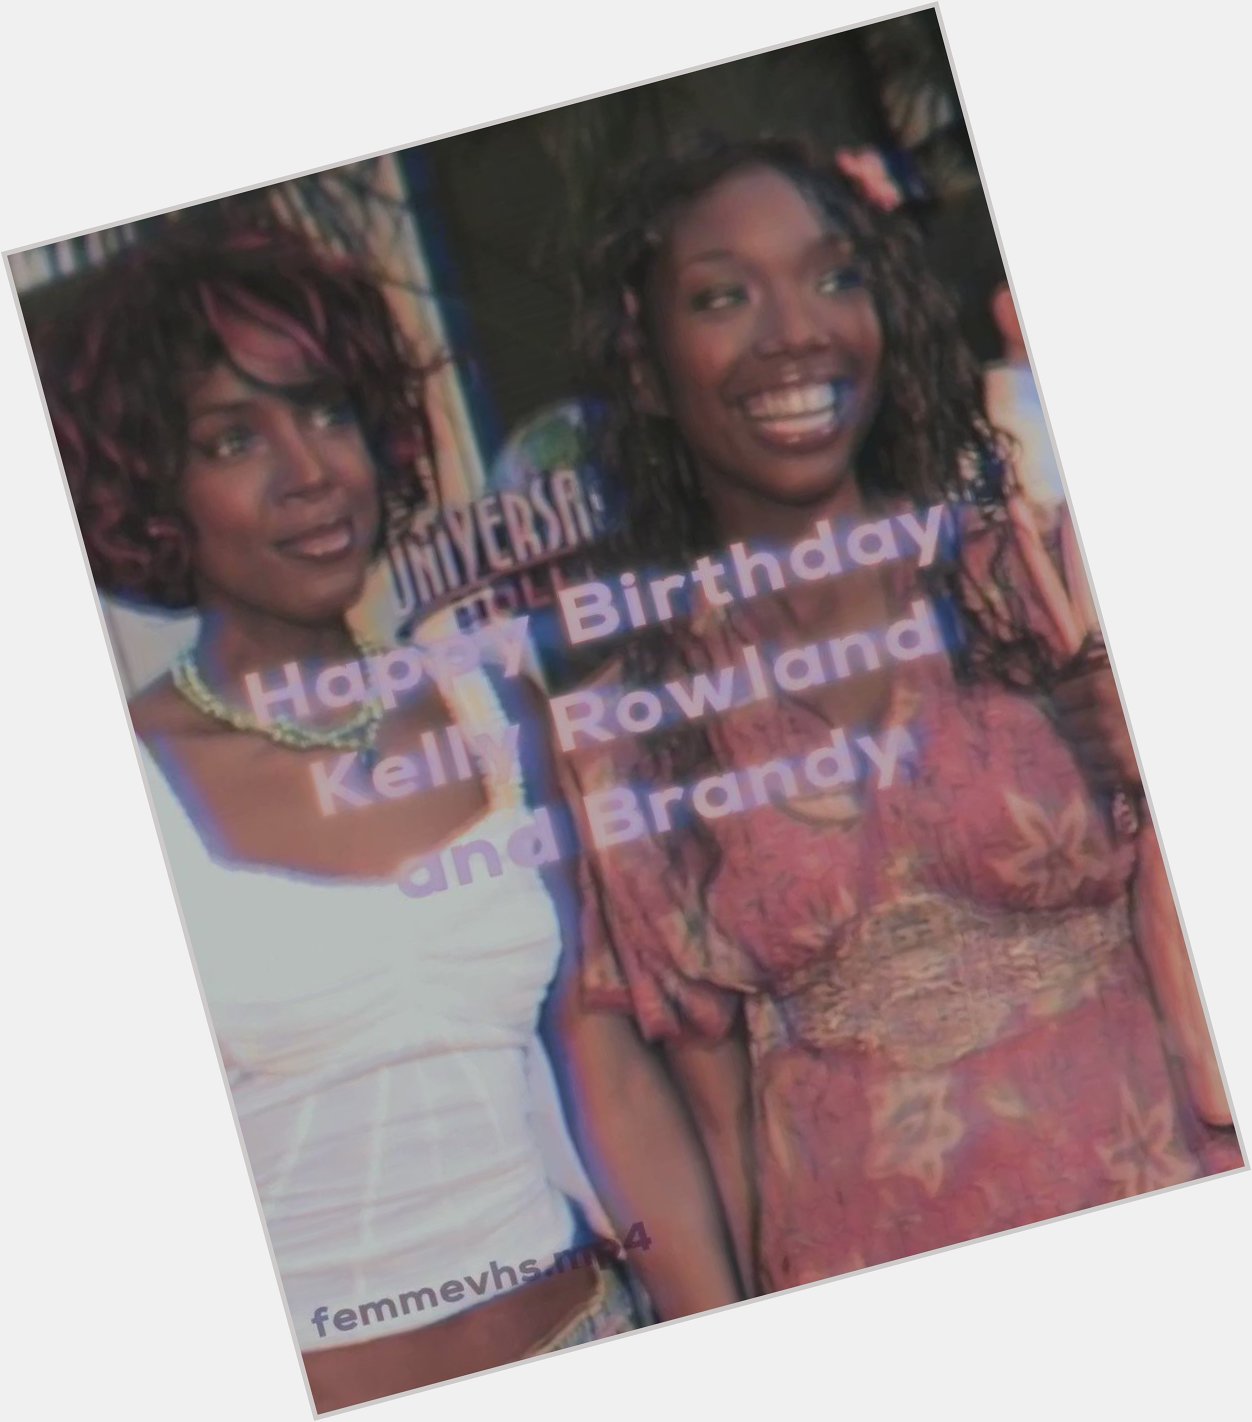 Happy Birthday Brandy and Kelly Rowland 